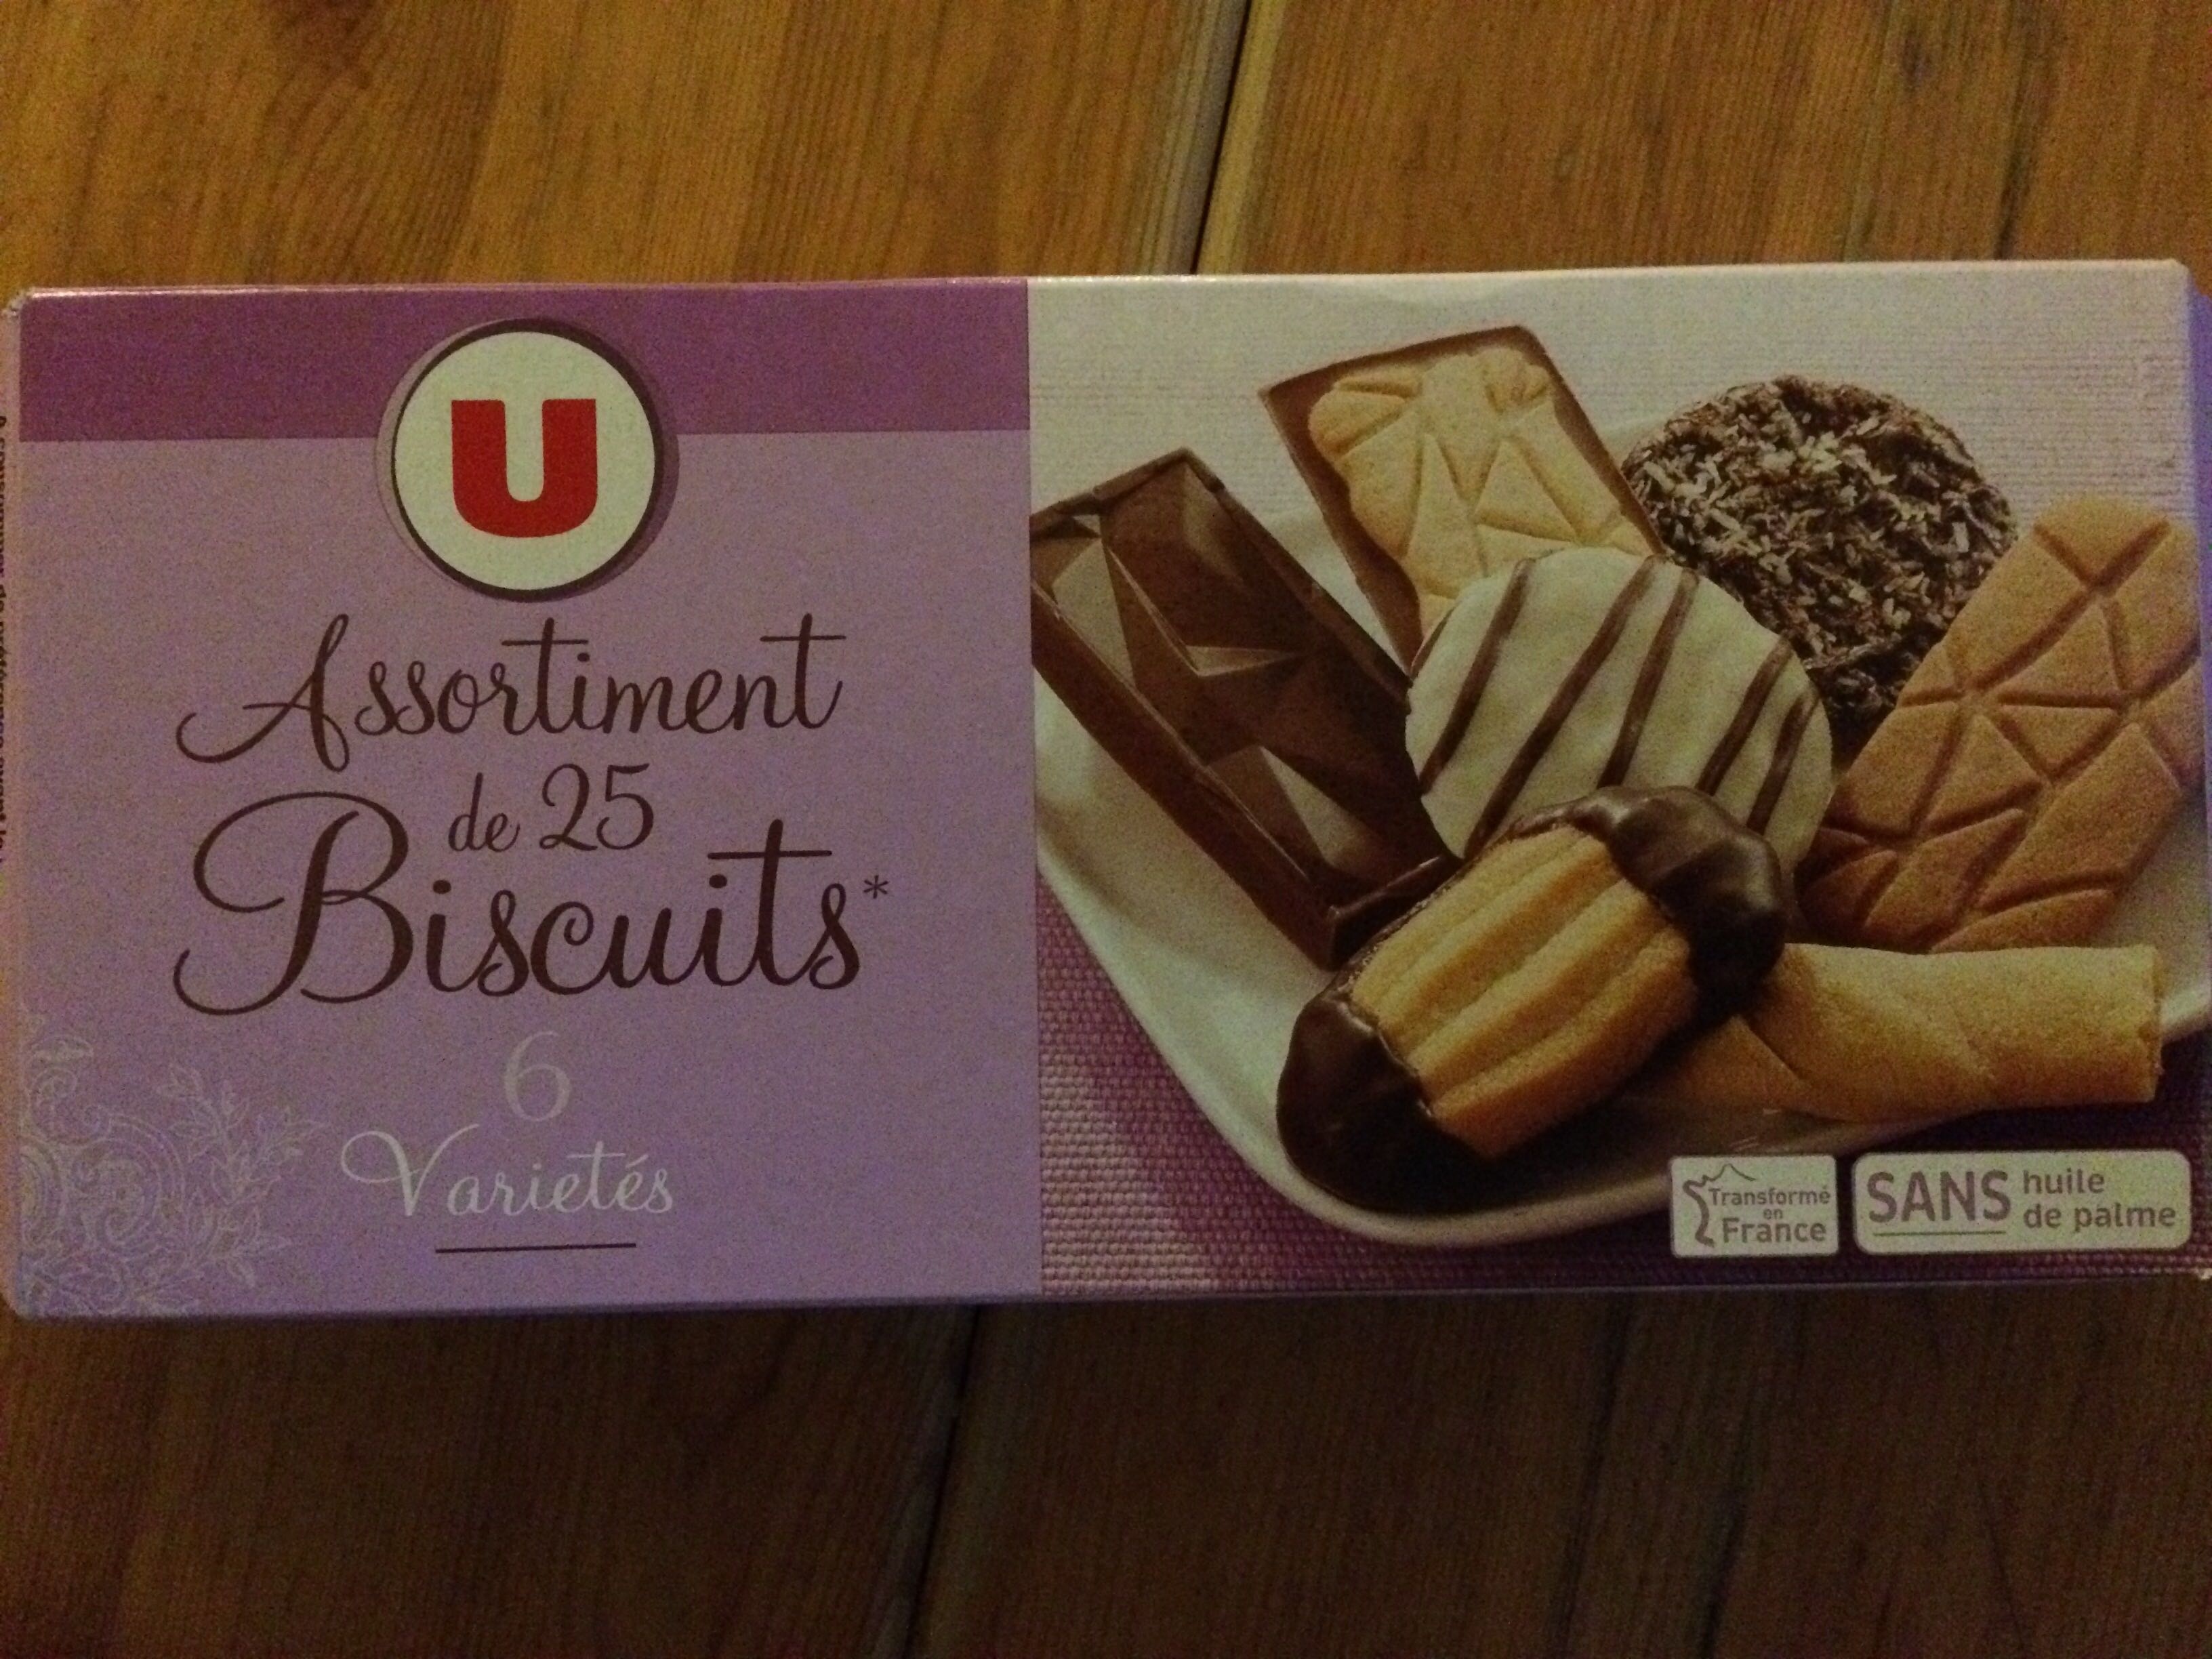 Assortiment de 25 Biscuits - Product - fr